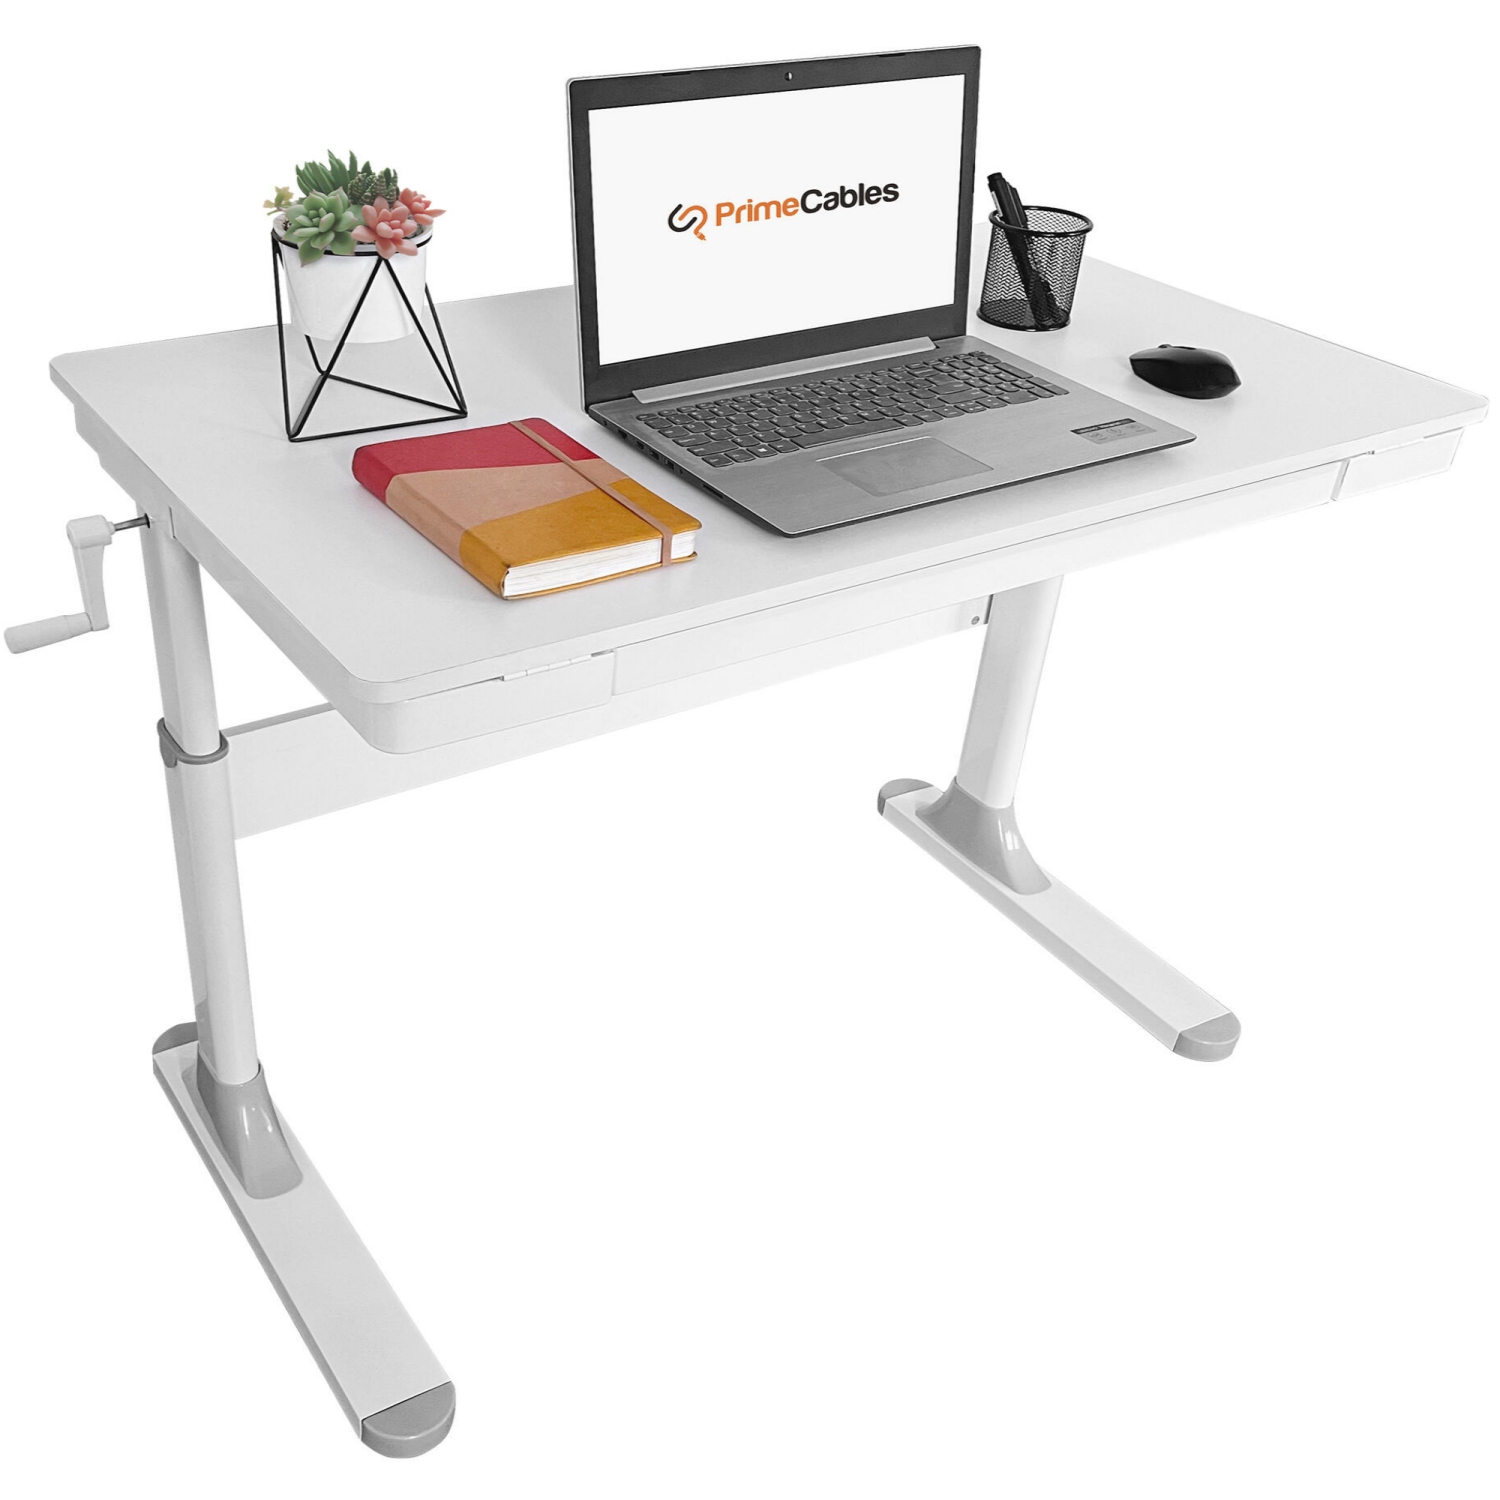 Multifunctional Height Adjustable Standing Desk, Manual Ergonomic Computer Desk with 47.24 x 23.62 inch Desktop - White